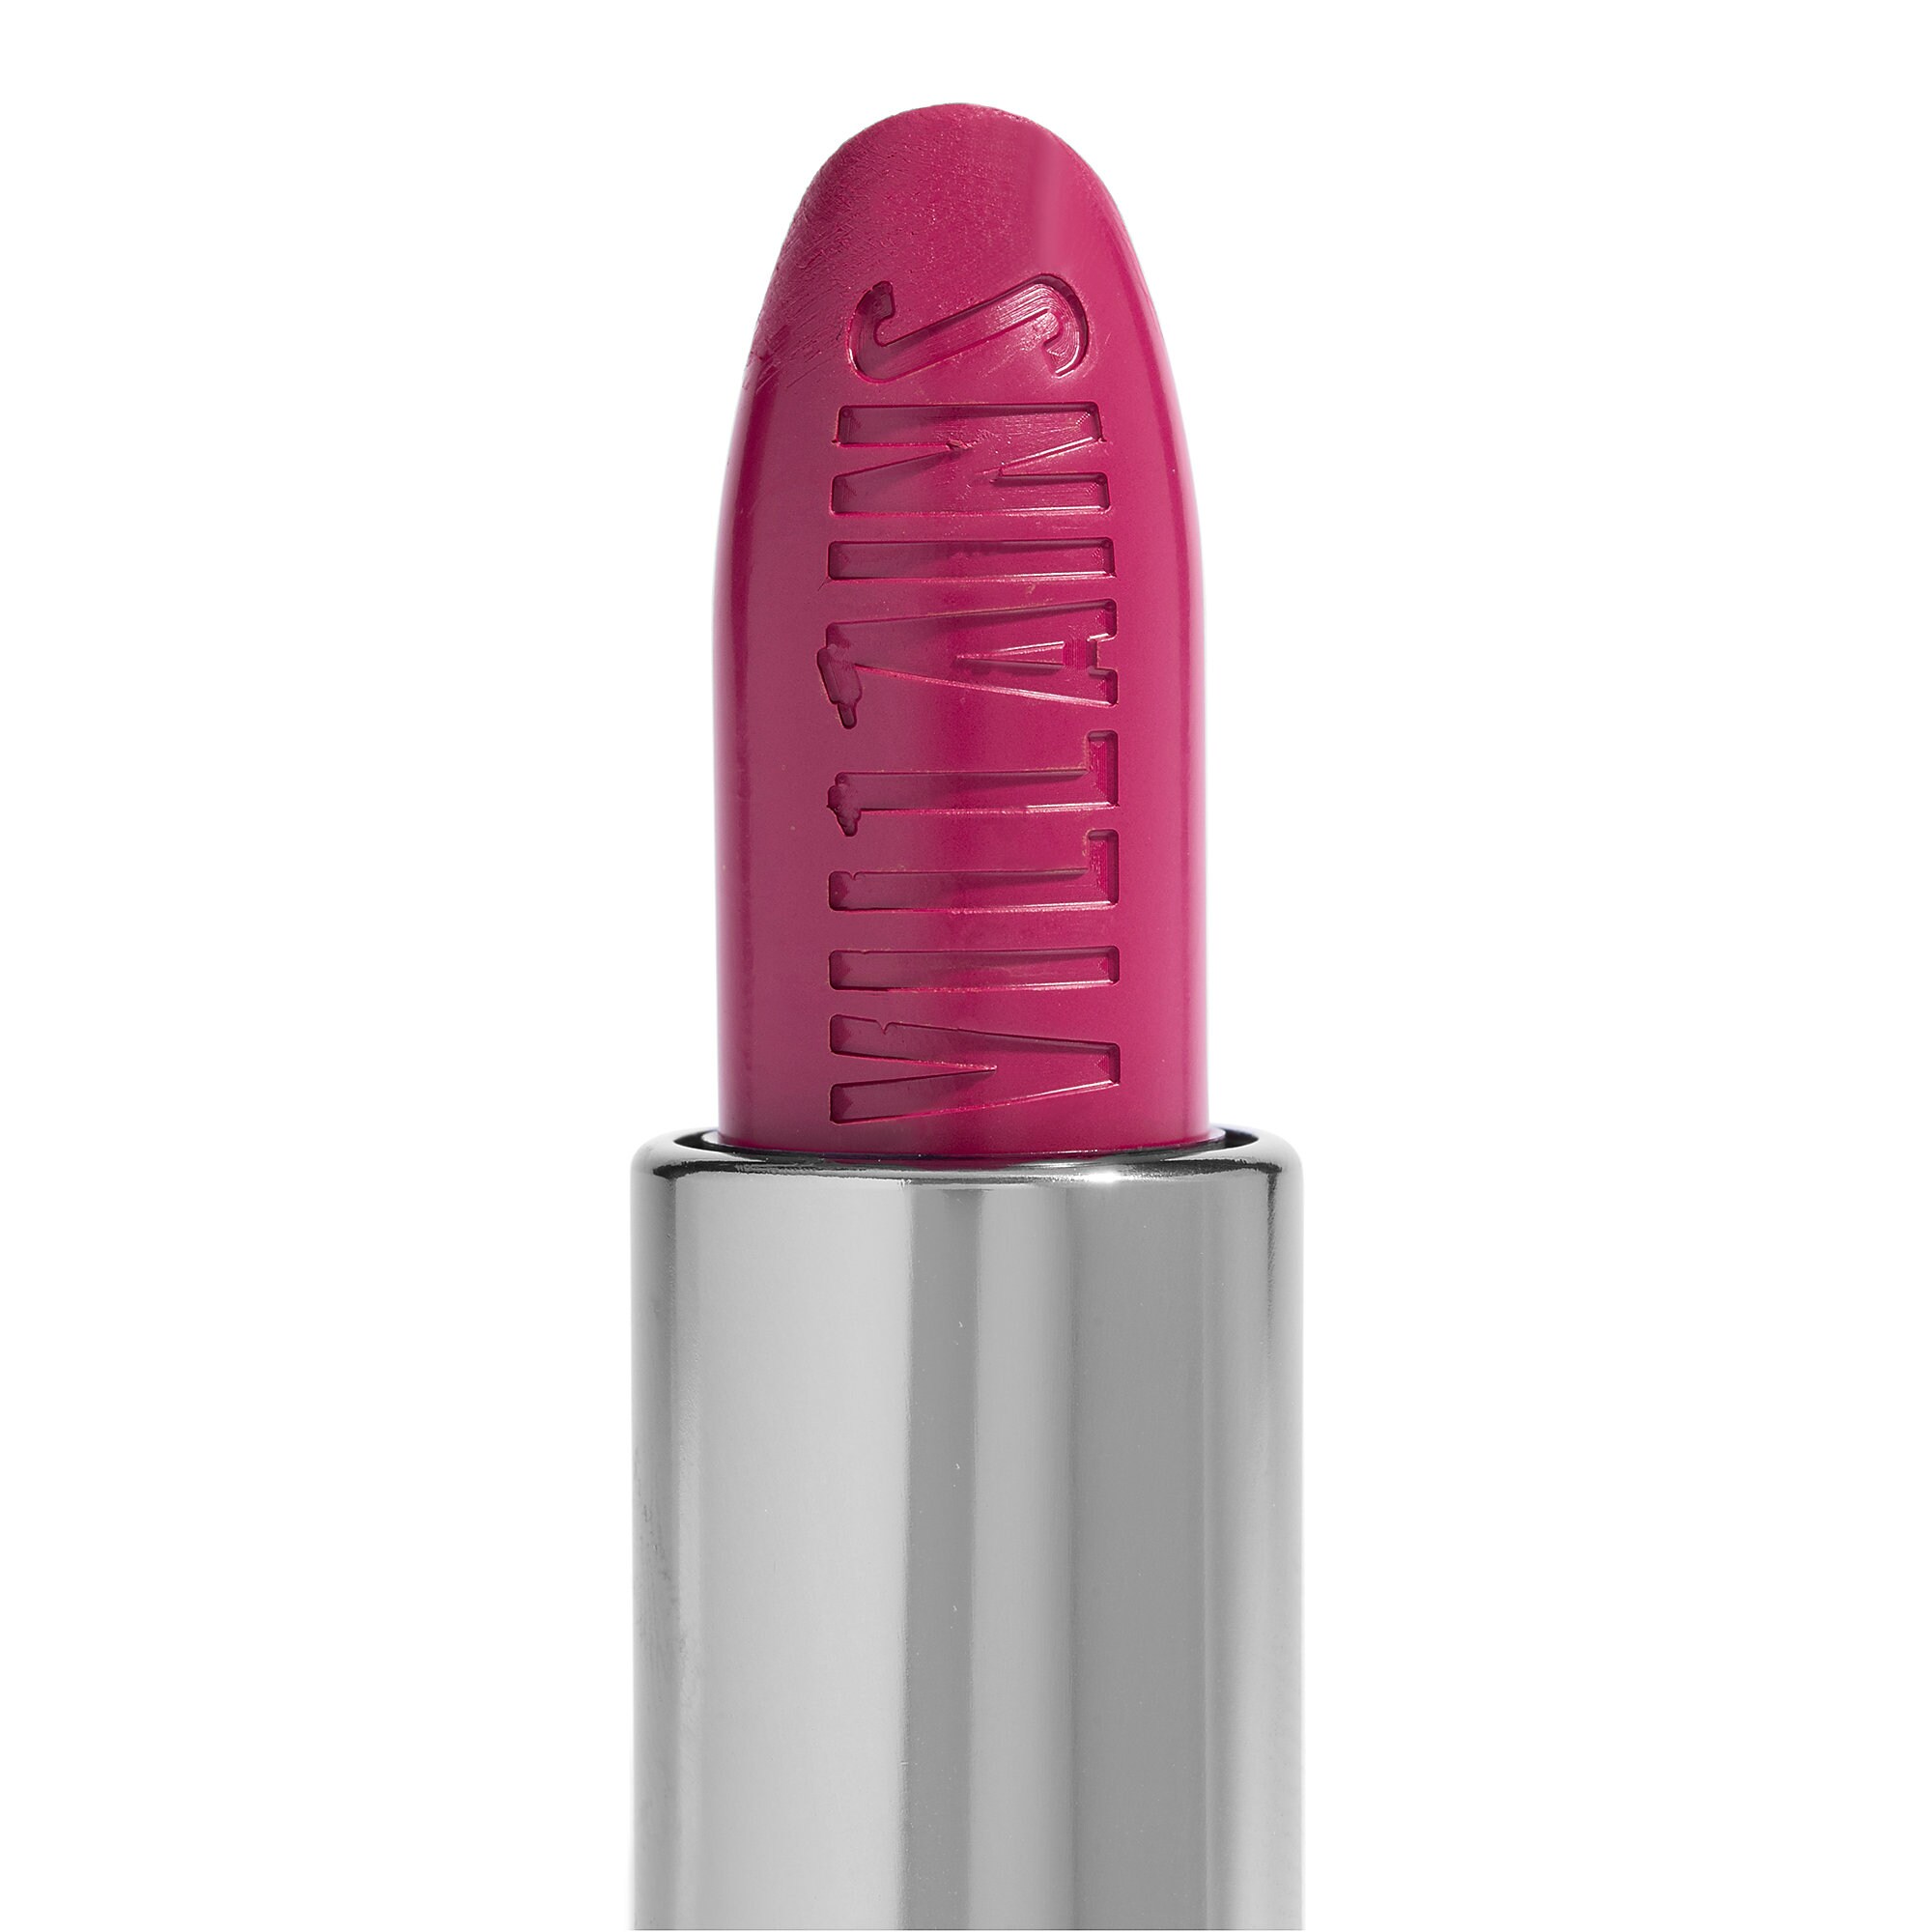 Maleficent Lux Lipstick by ColourPop - Creme